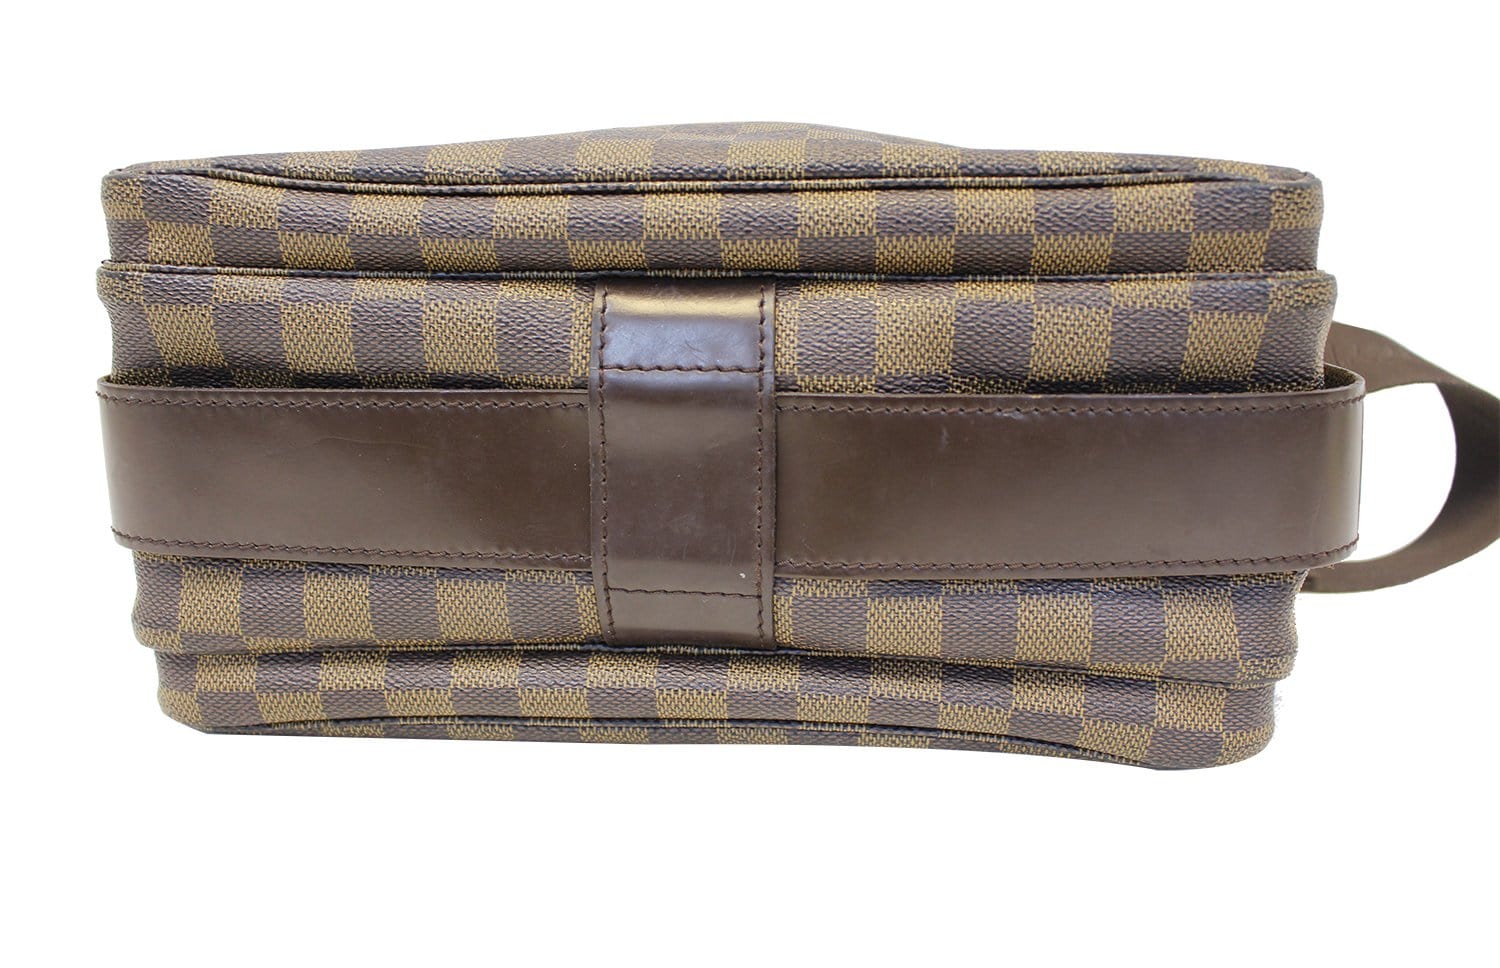 Louis Vuitton Vintage Brown Damier Ebene Naviglio Canvas Messenger Bag, Best Price and Reviews